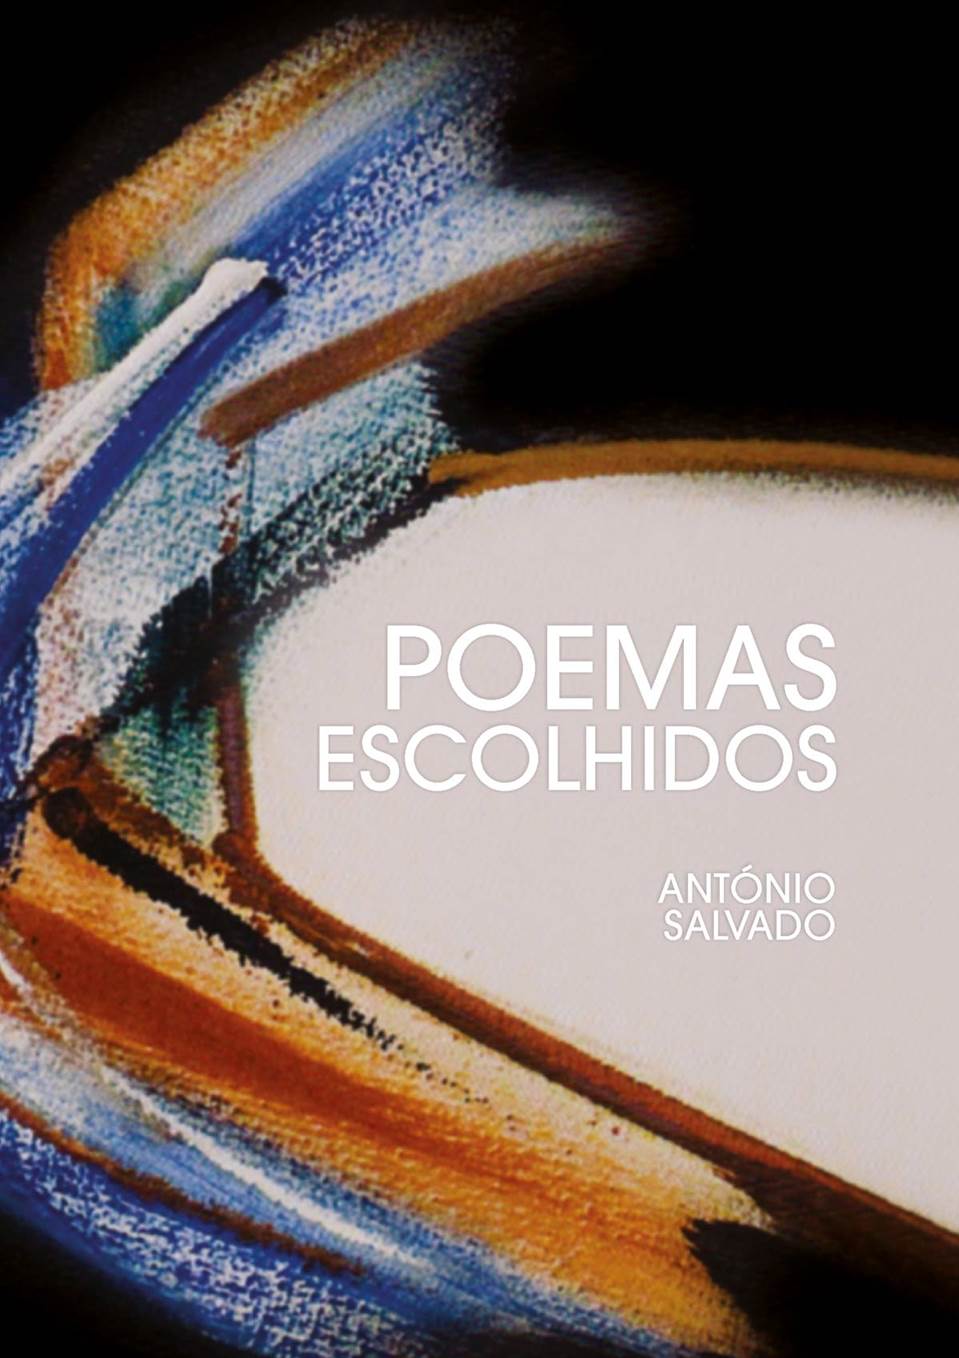 Castelo Branco: Autarquia apresenta "Poemas escolhidos"de António Salvado